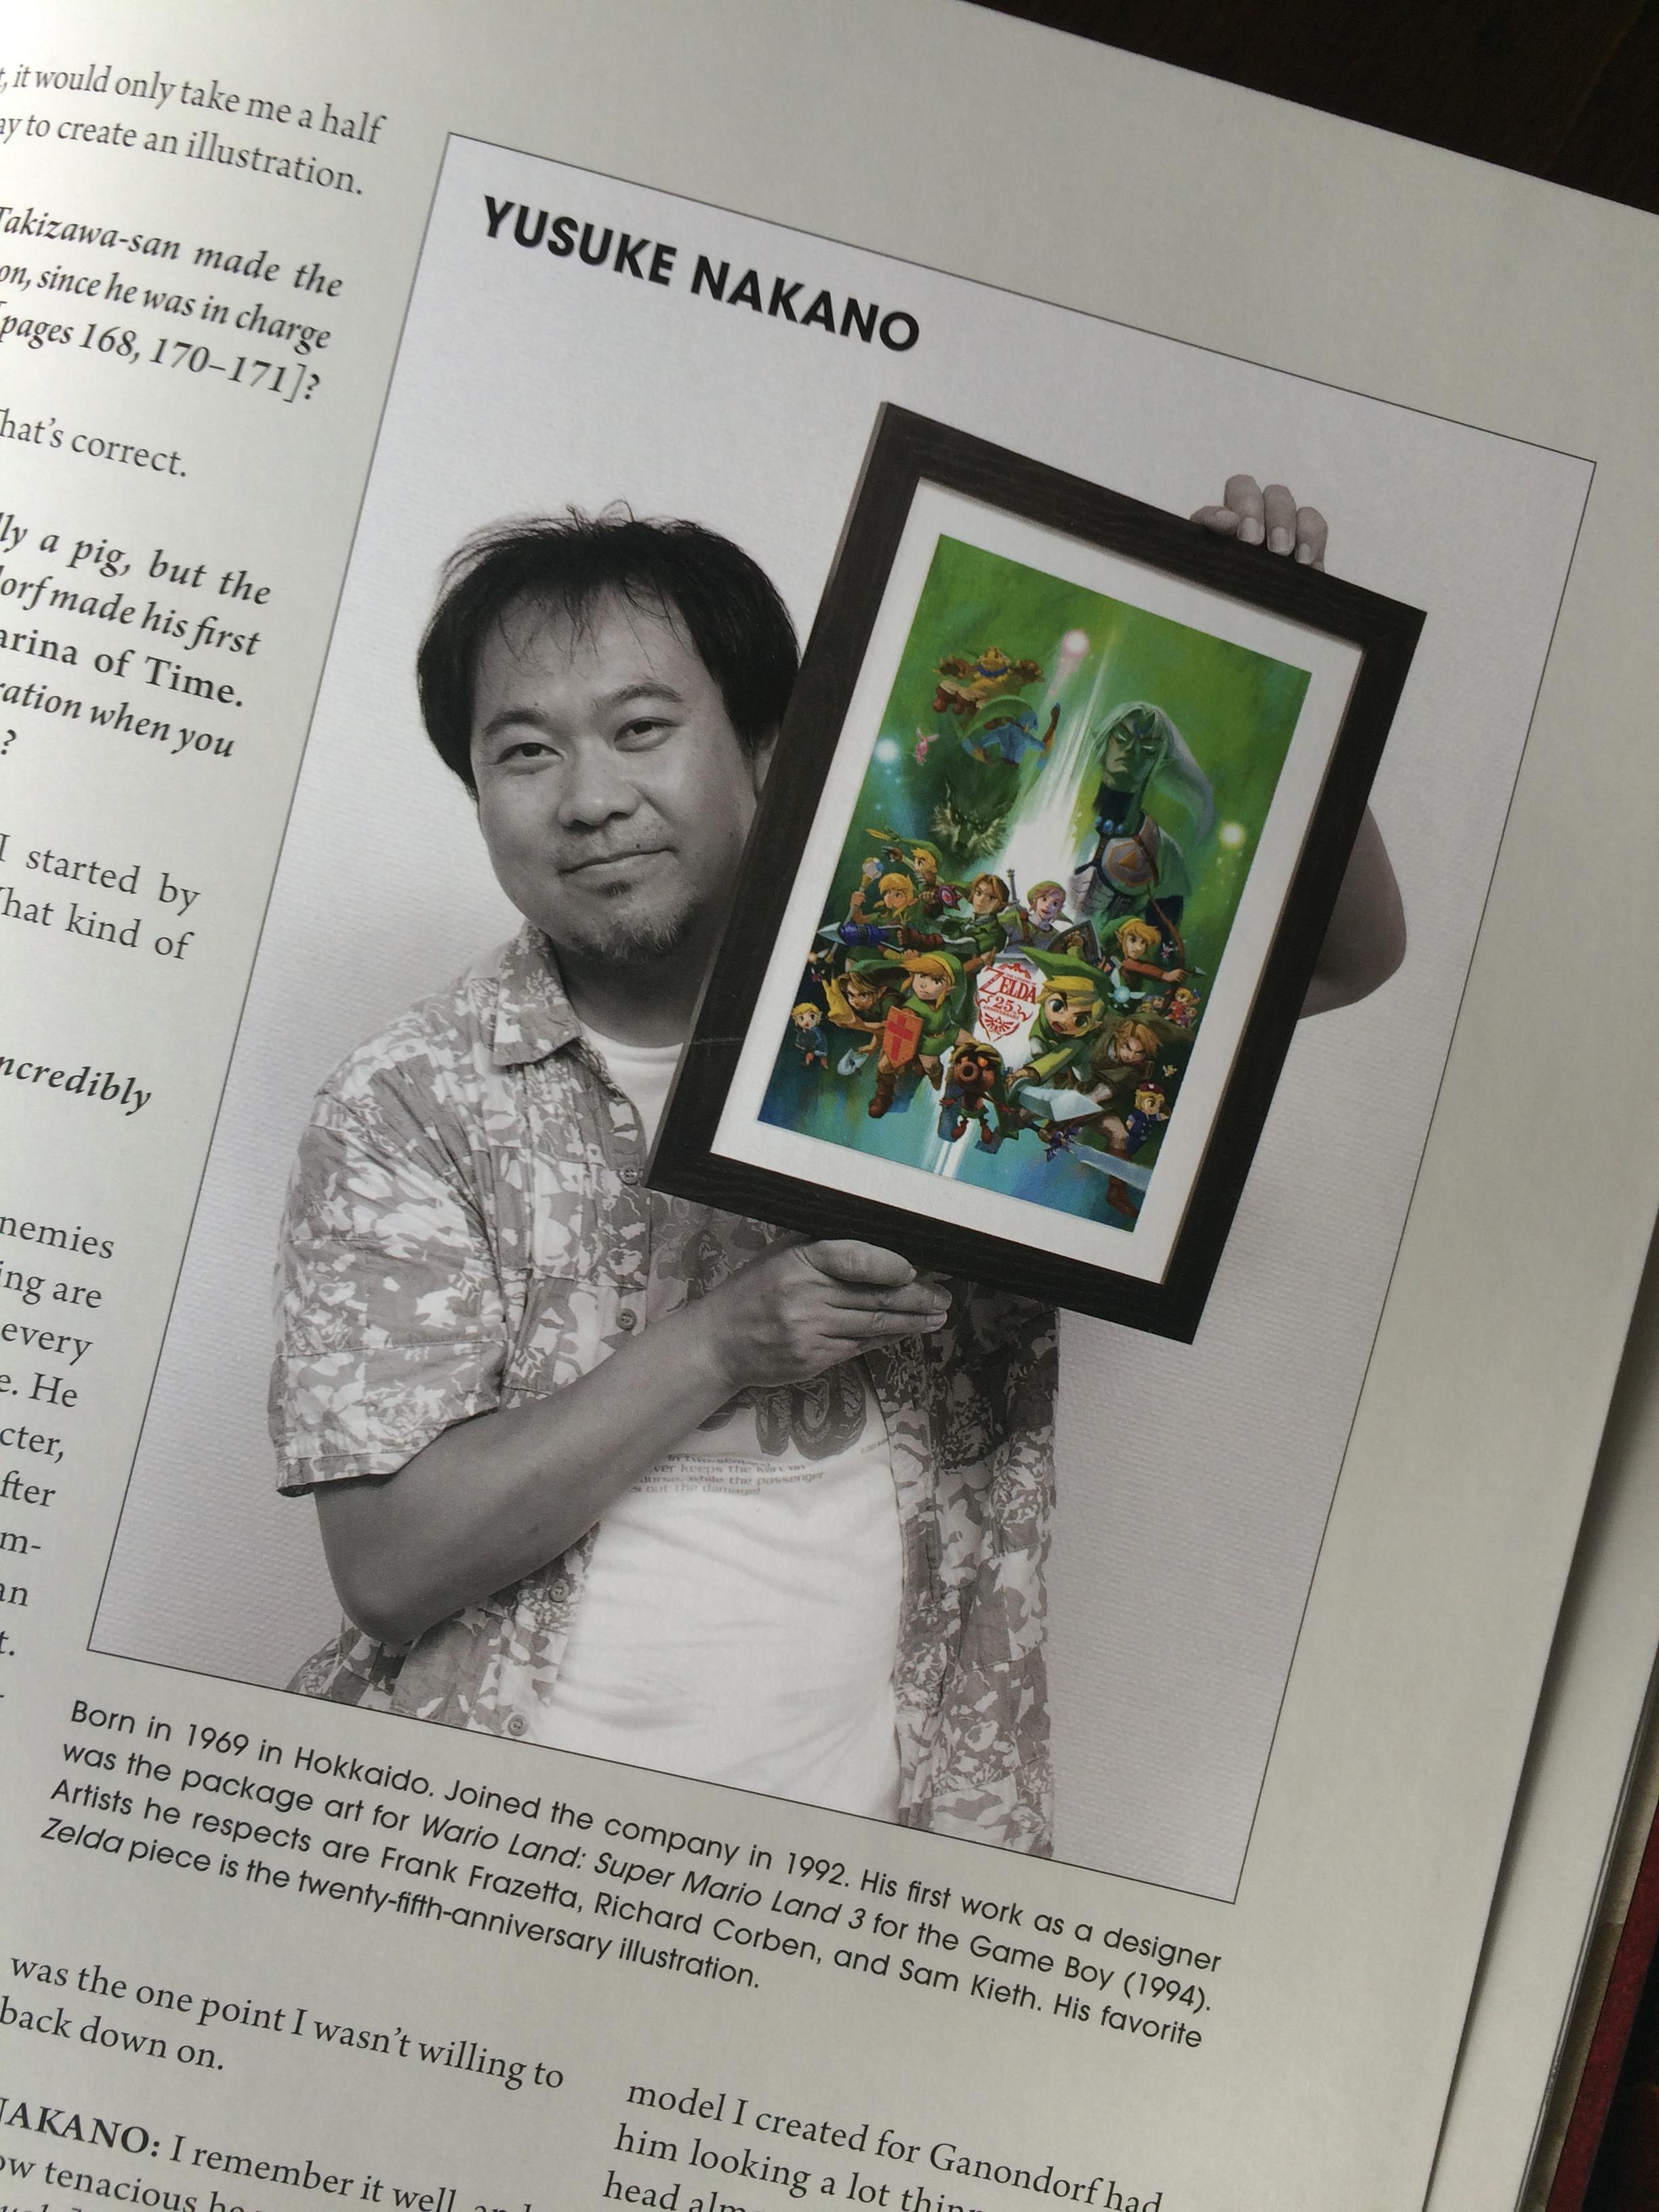 Yusuke Nakano's favorite piece of art from The Legend of Zelda